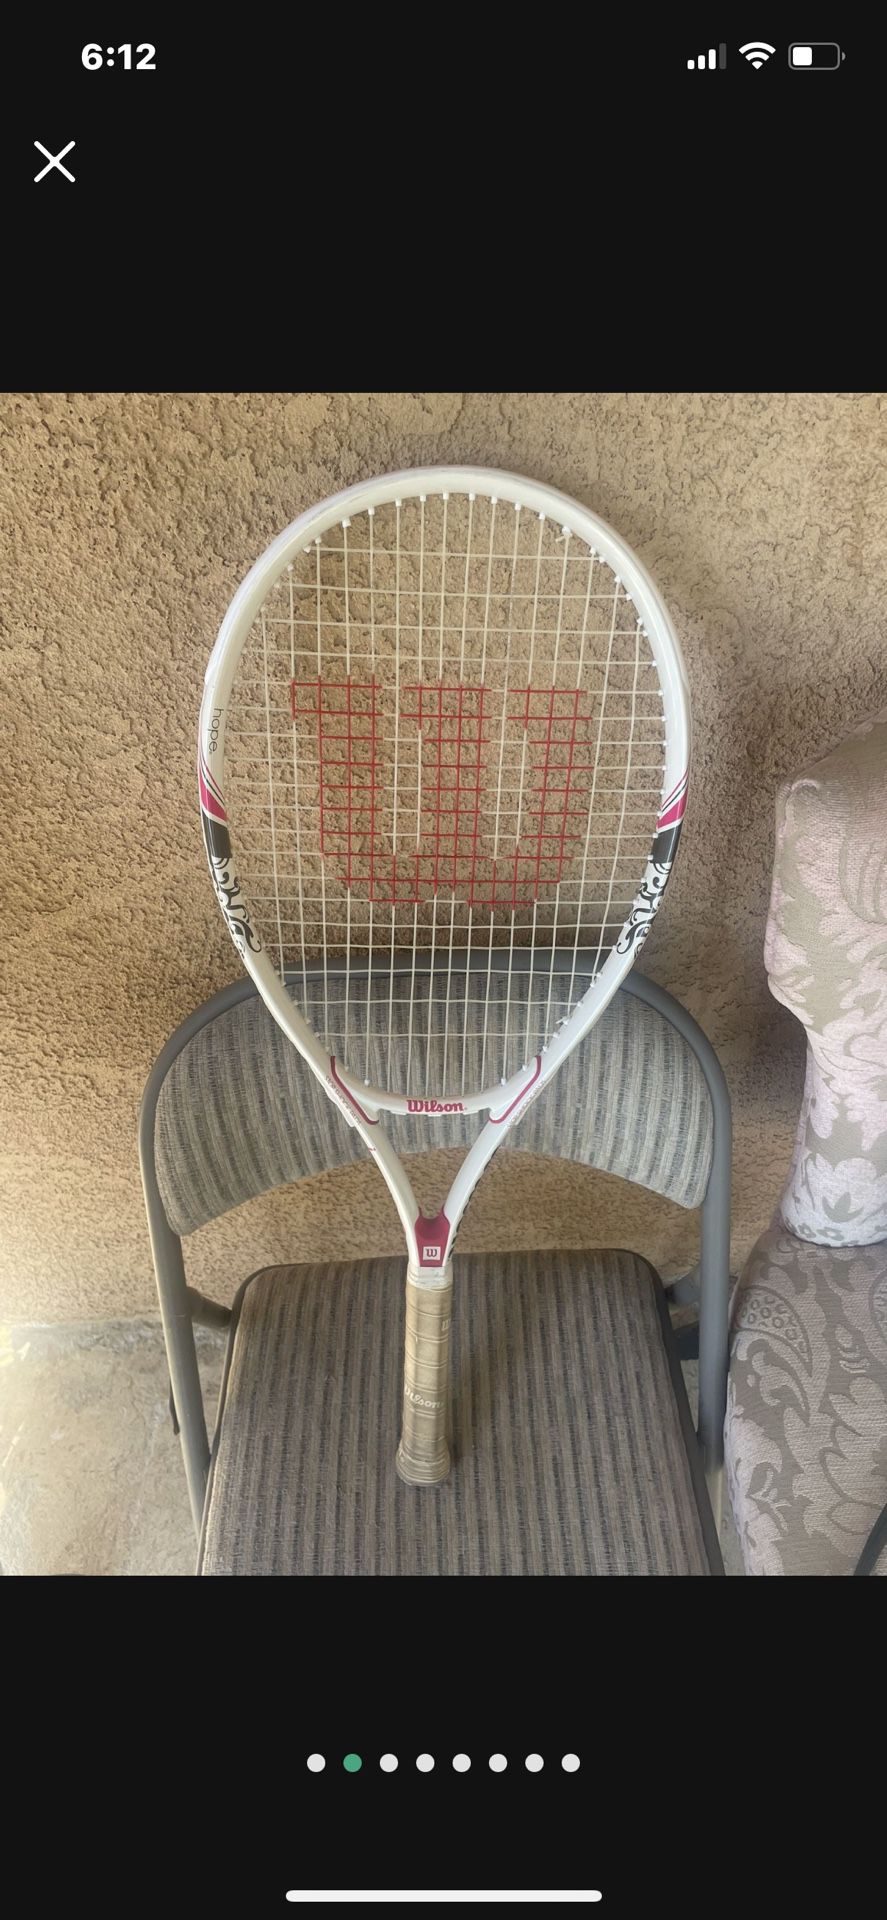 Wilson beginner tennis  racket 4 1/8